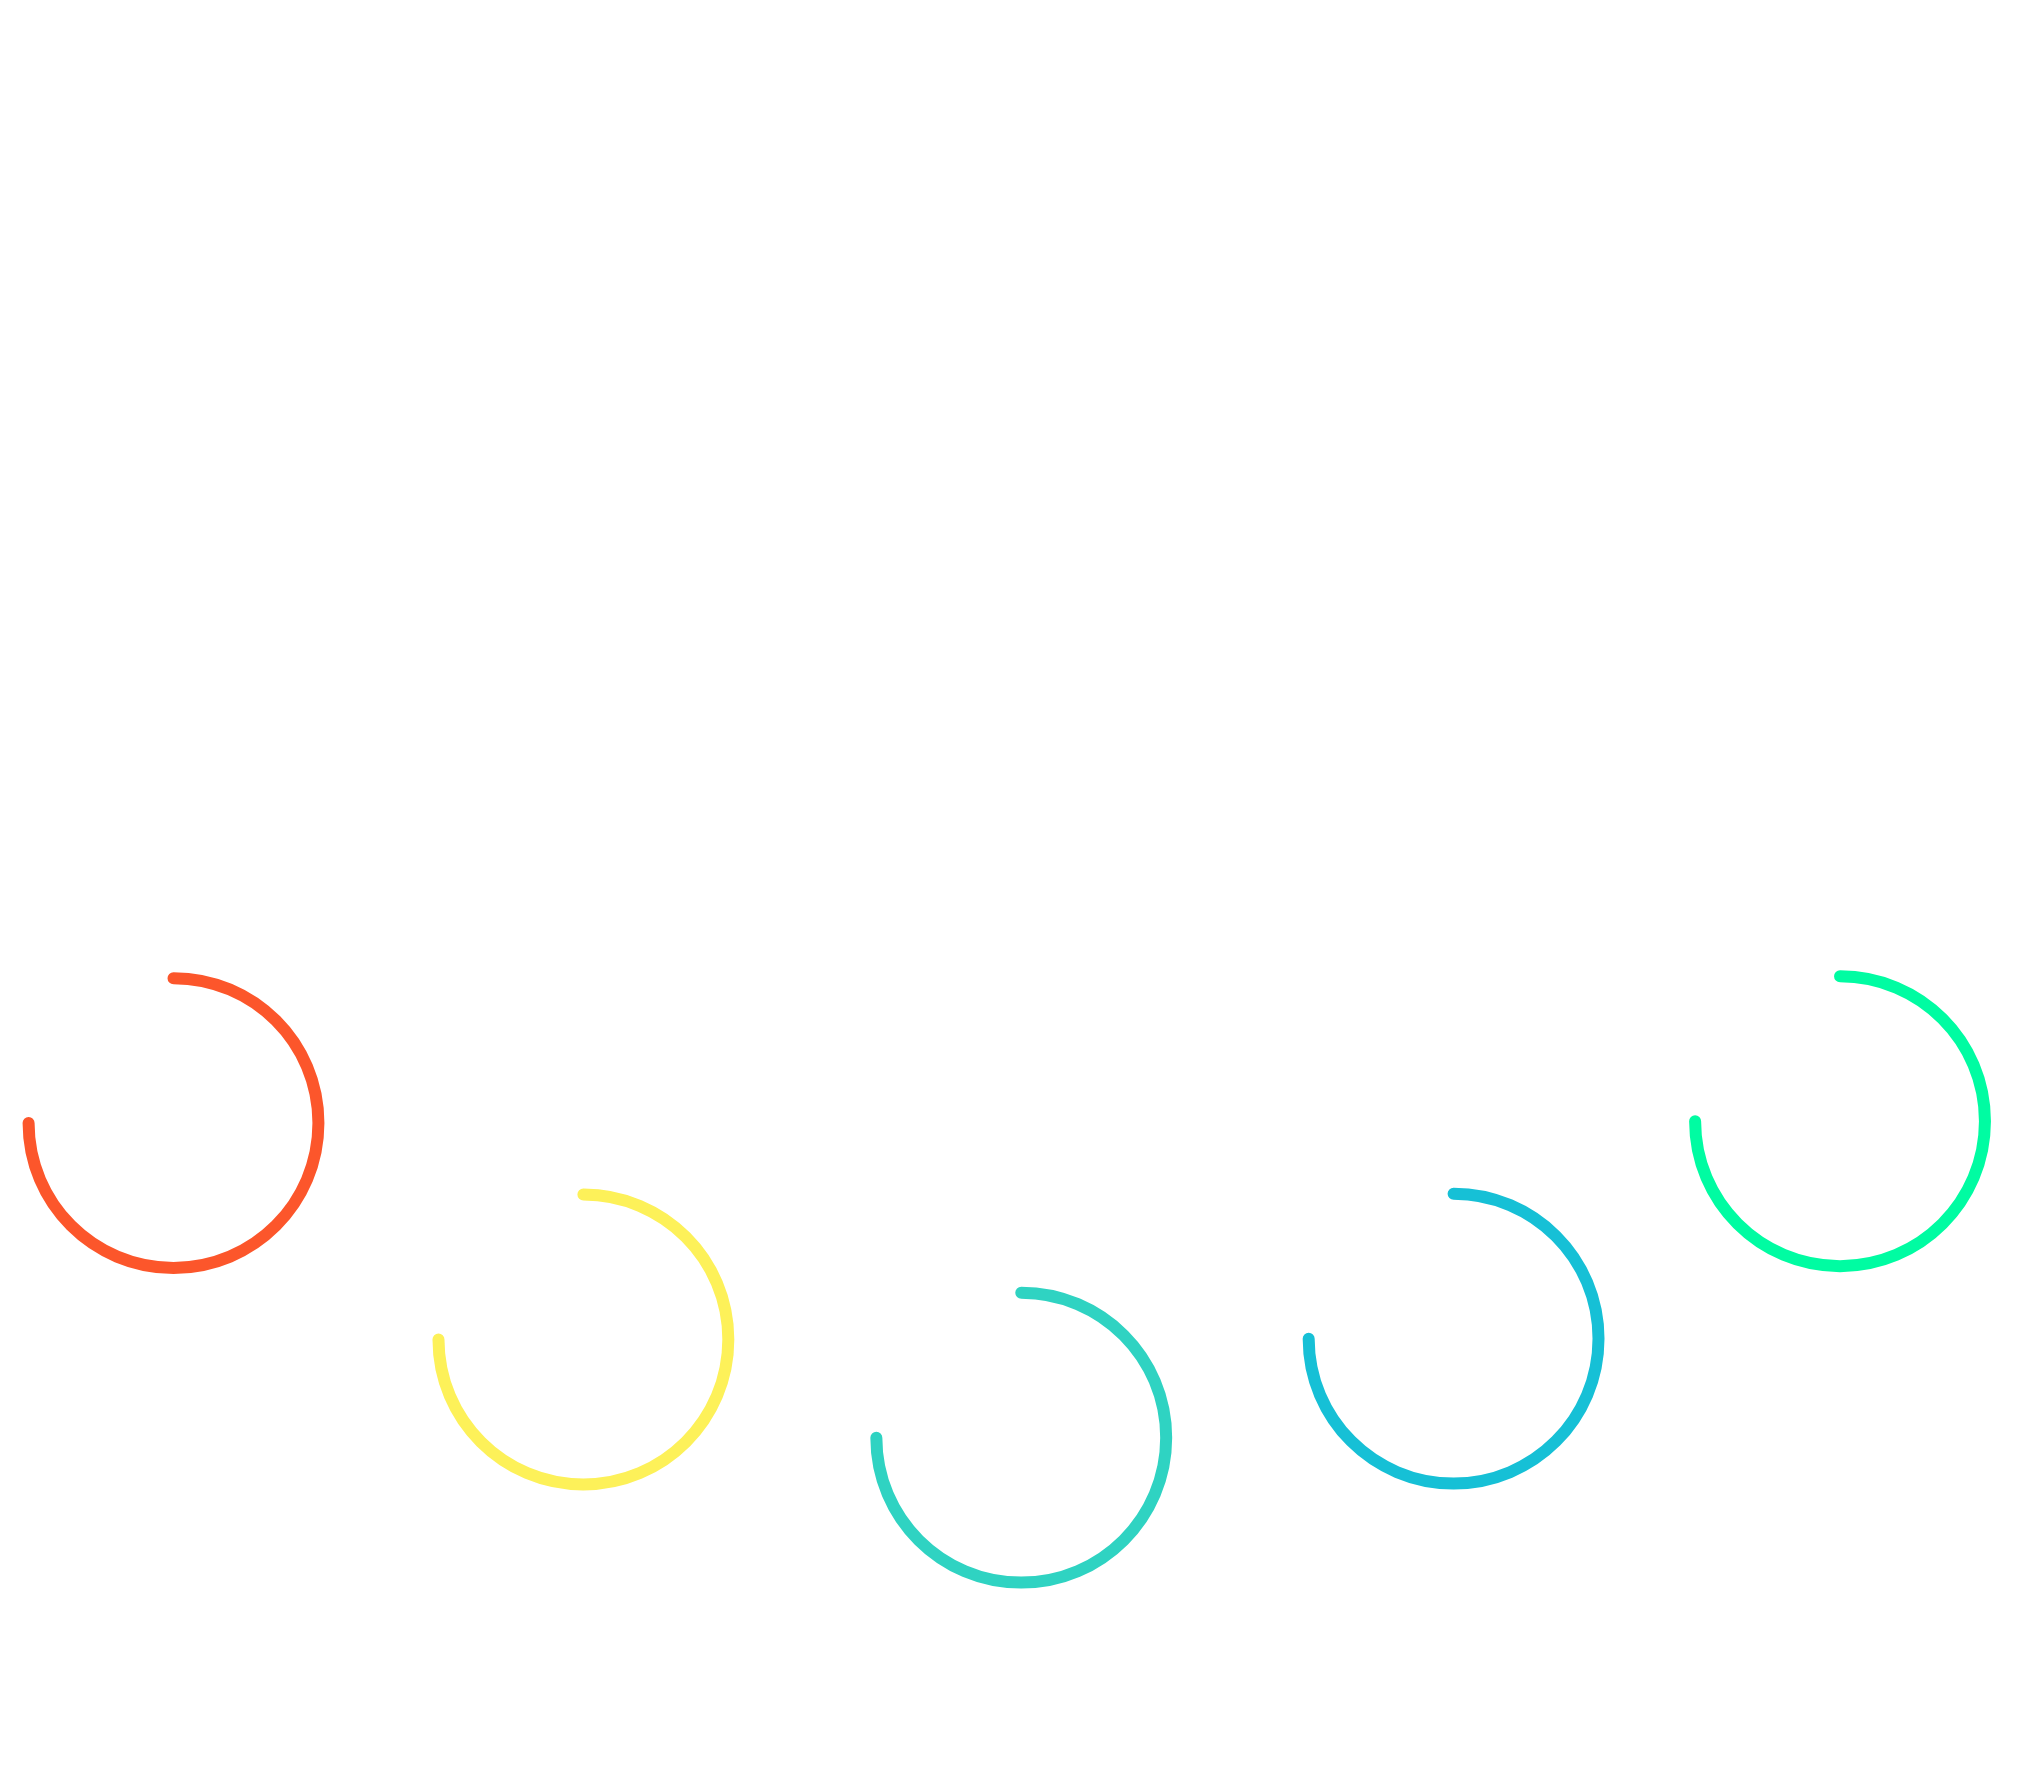 B-Corporation